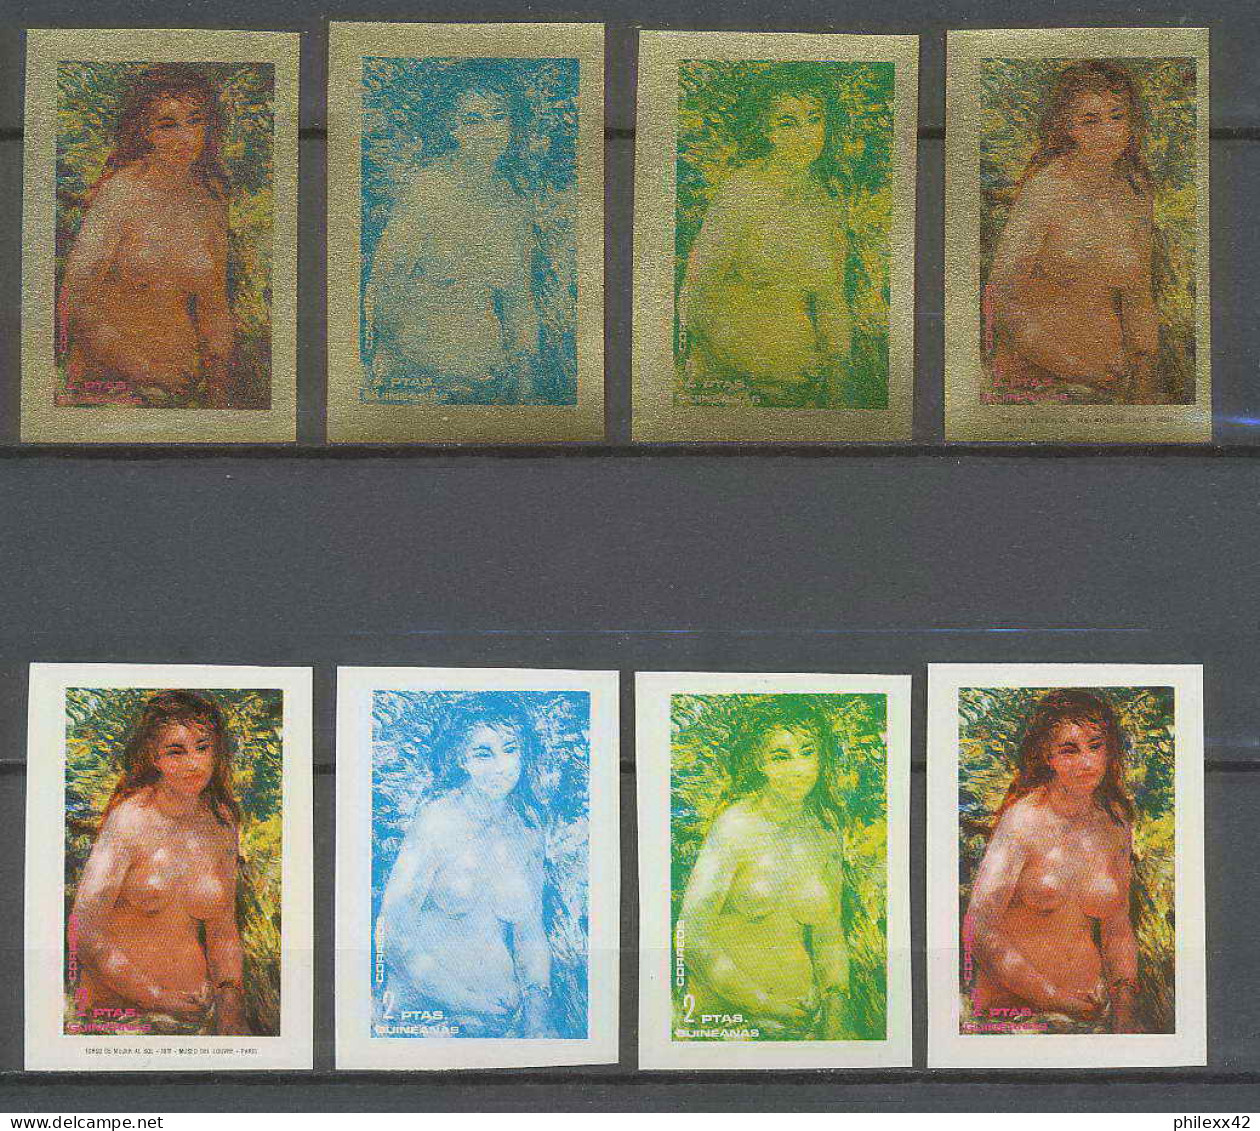 Guinée équatoriale Guinea 227 N°209 Renoir Essai Proof Non Dentelé Imperf Orate Tableau Painting Nus Nudes MNH ** - Nudi